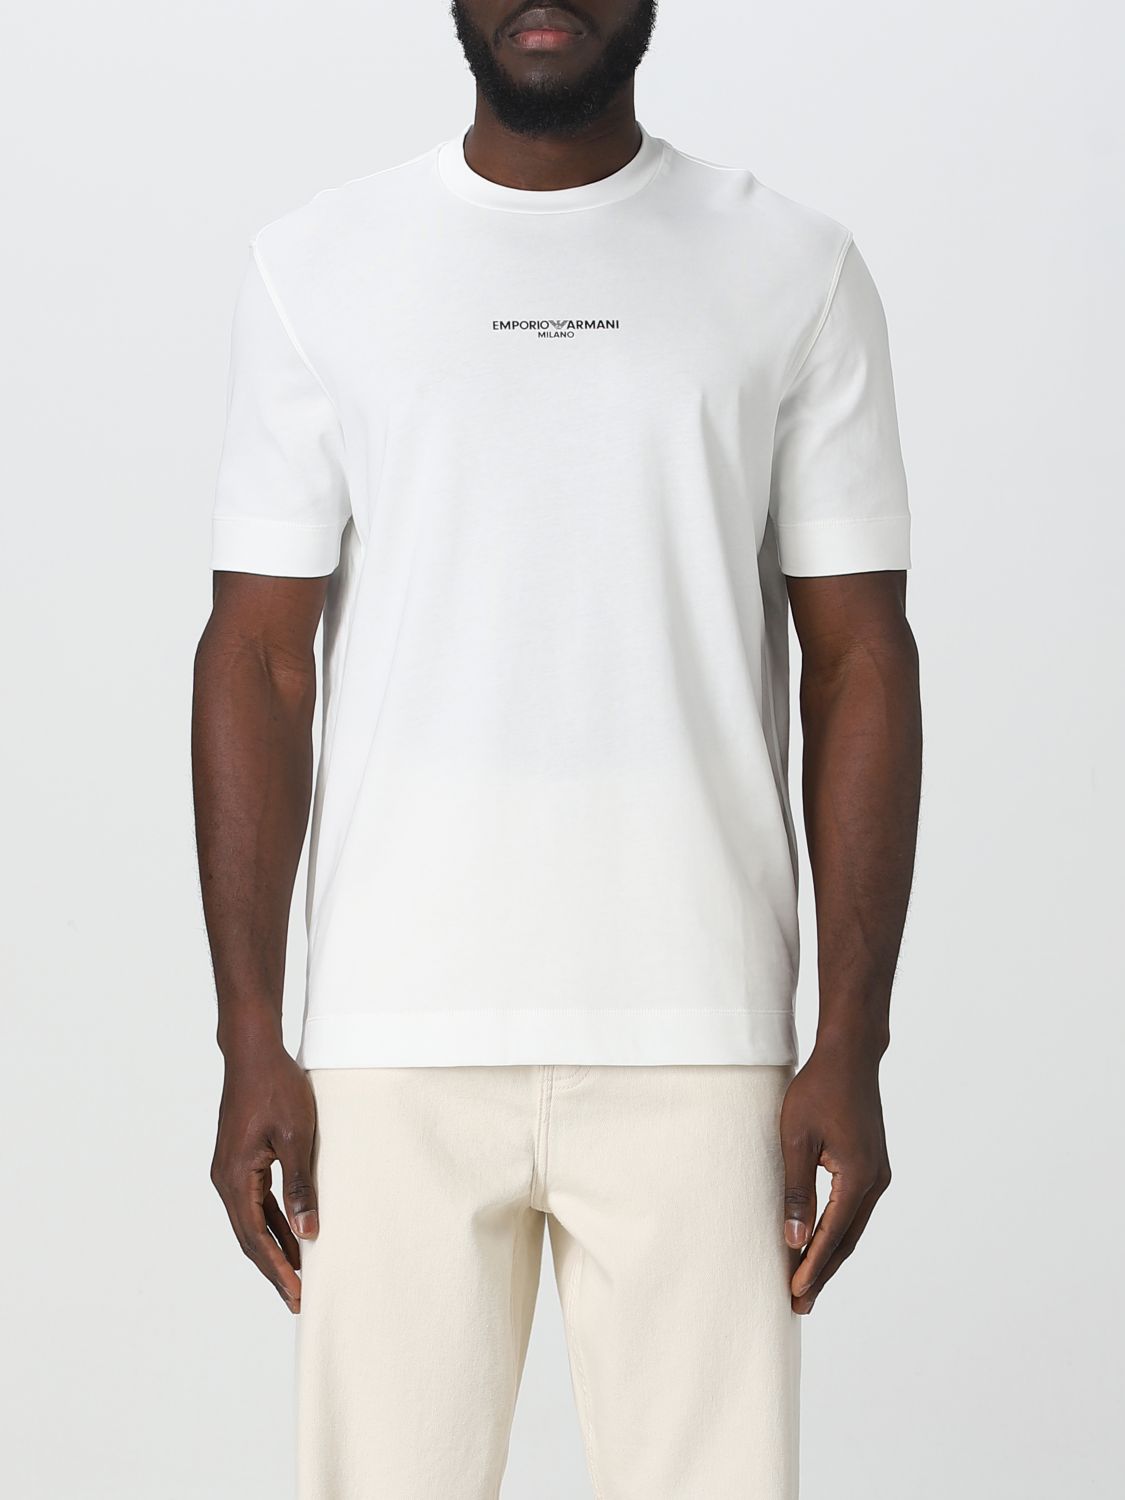 EMPORIO ARMANI: t-shirt for man - White | Emporio Armani t-shirt  3R1TL11JWZZ online on 